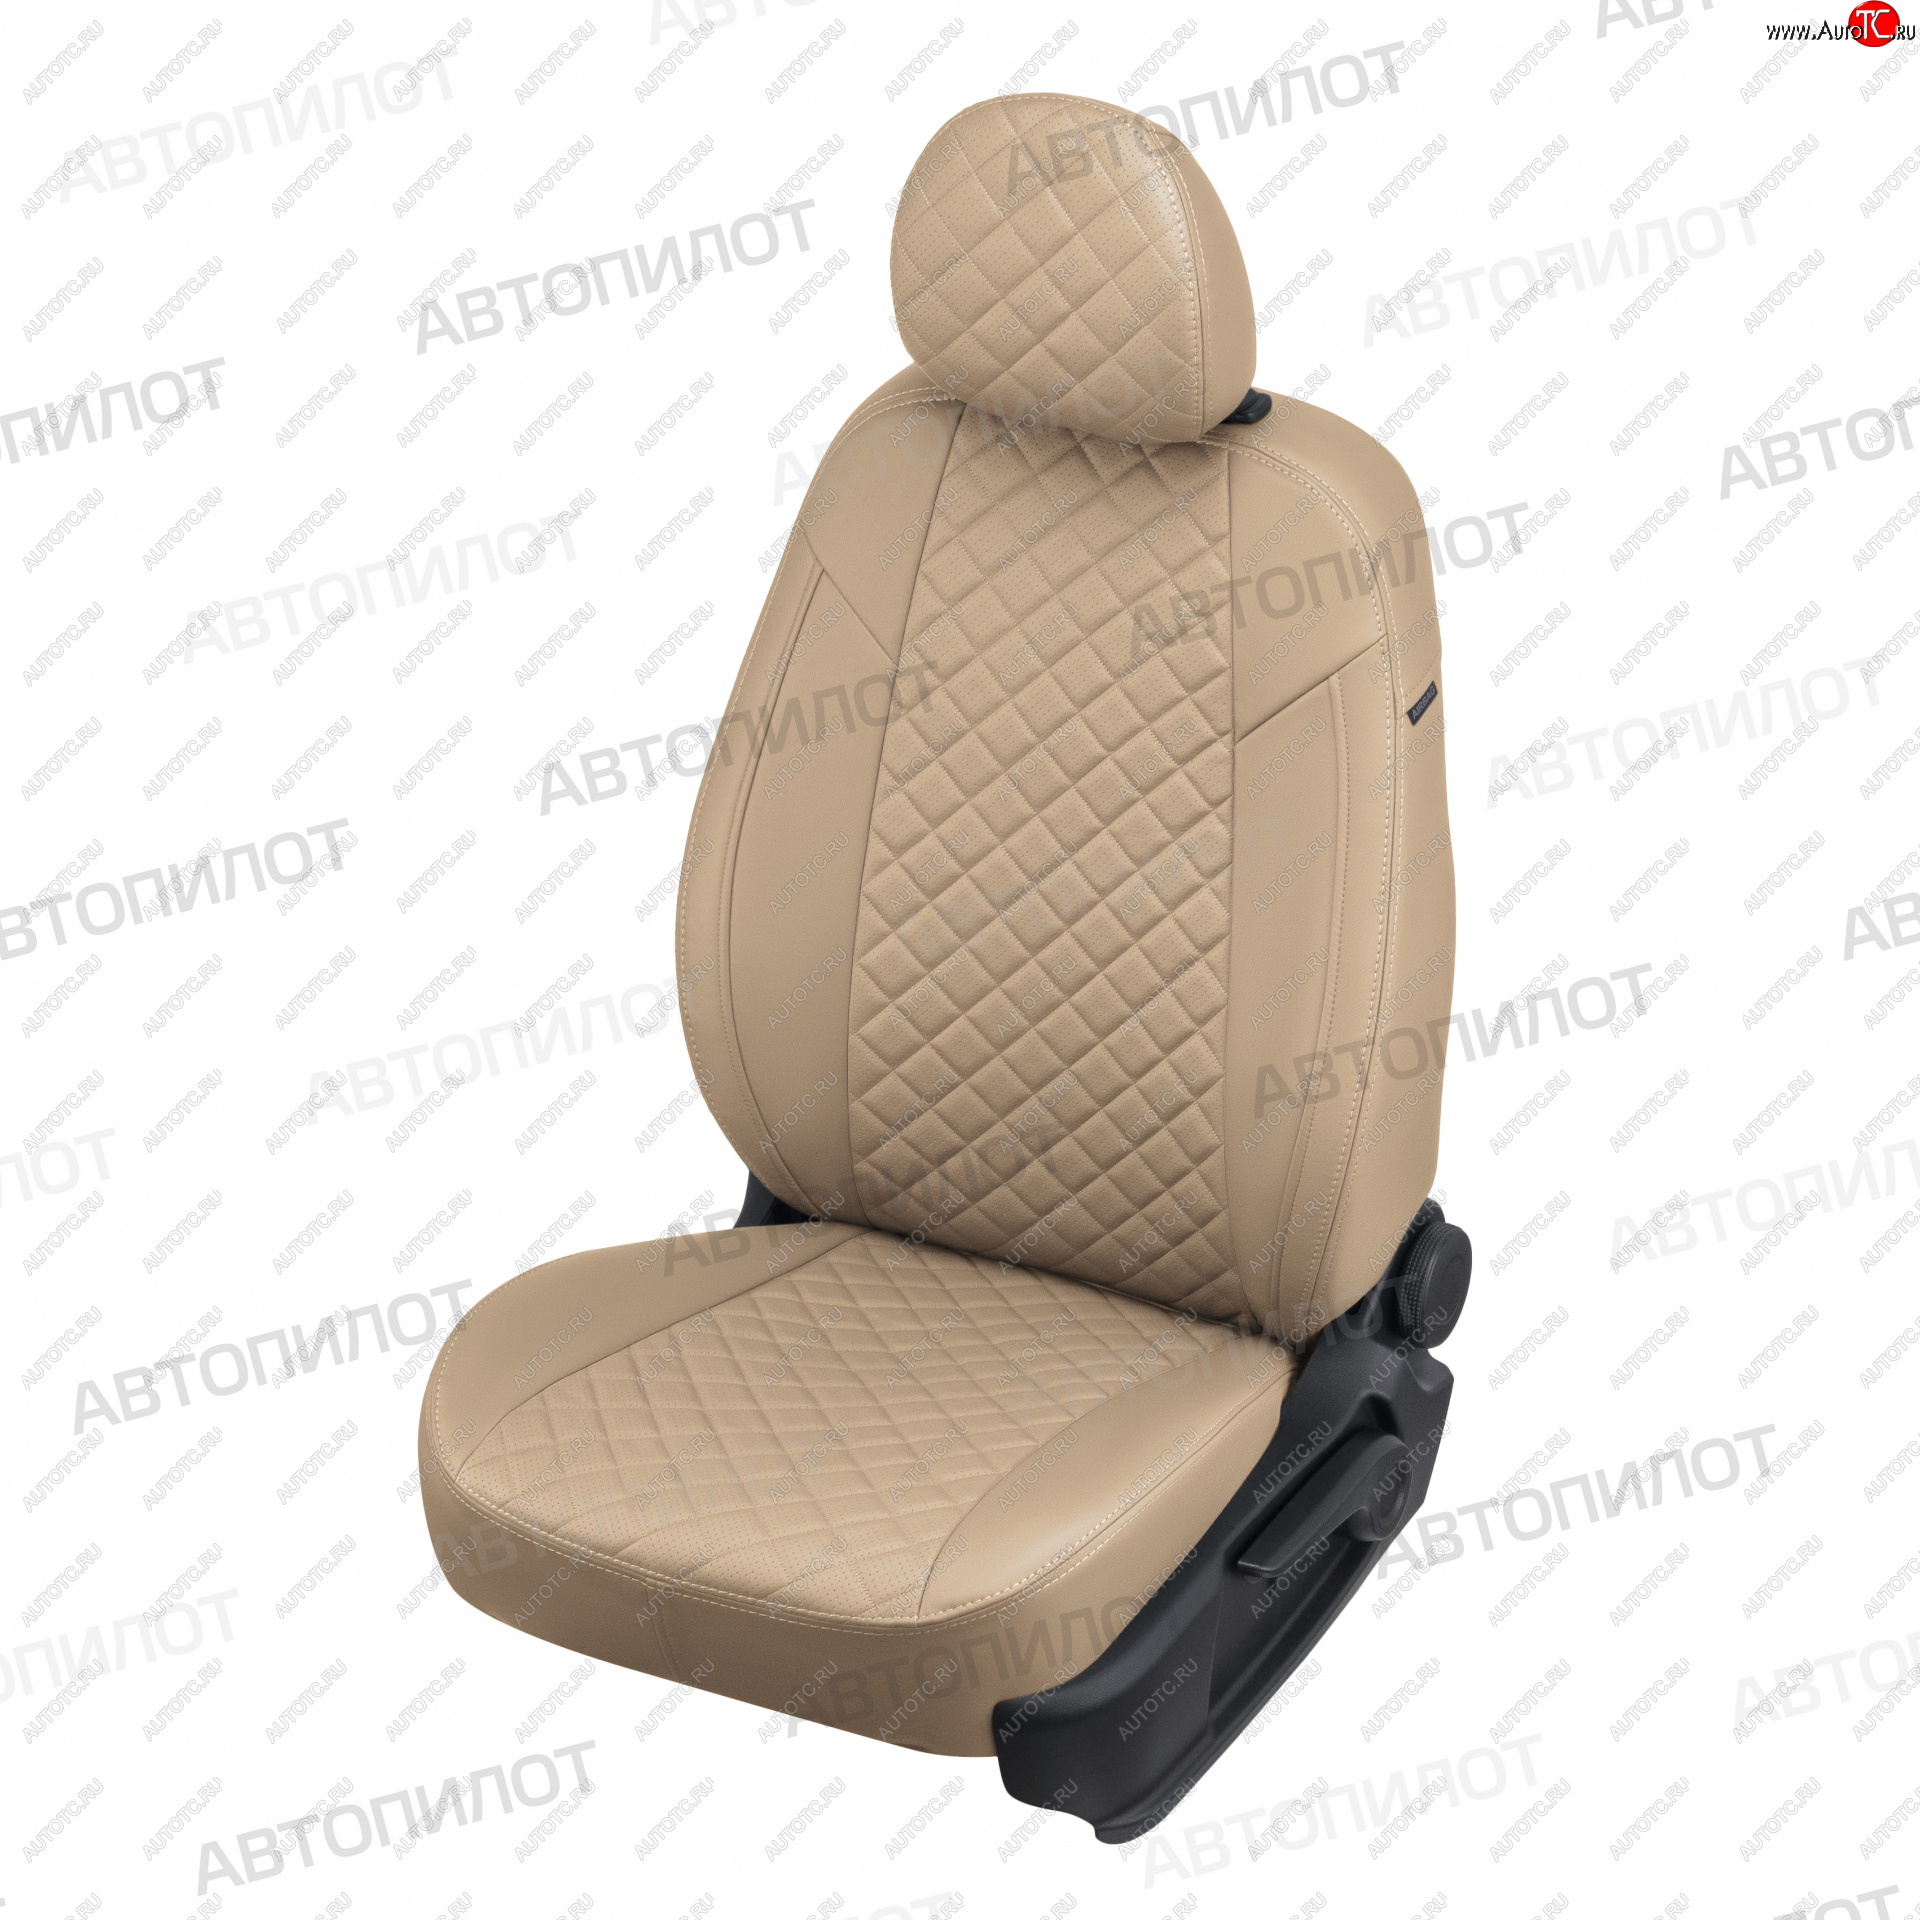 13 999 р. Чехлы сидений (экокожа) Автопилот Ромб  Chevrolet Trailblazer  GM800 (2012-2016) (темно-бежевый)